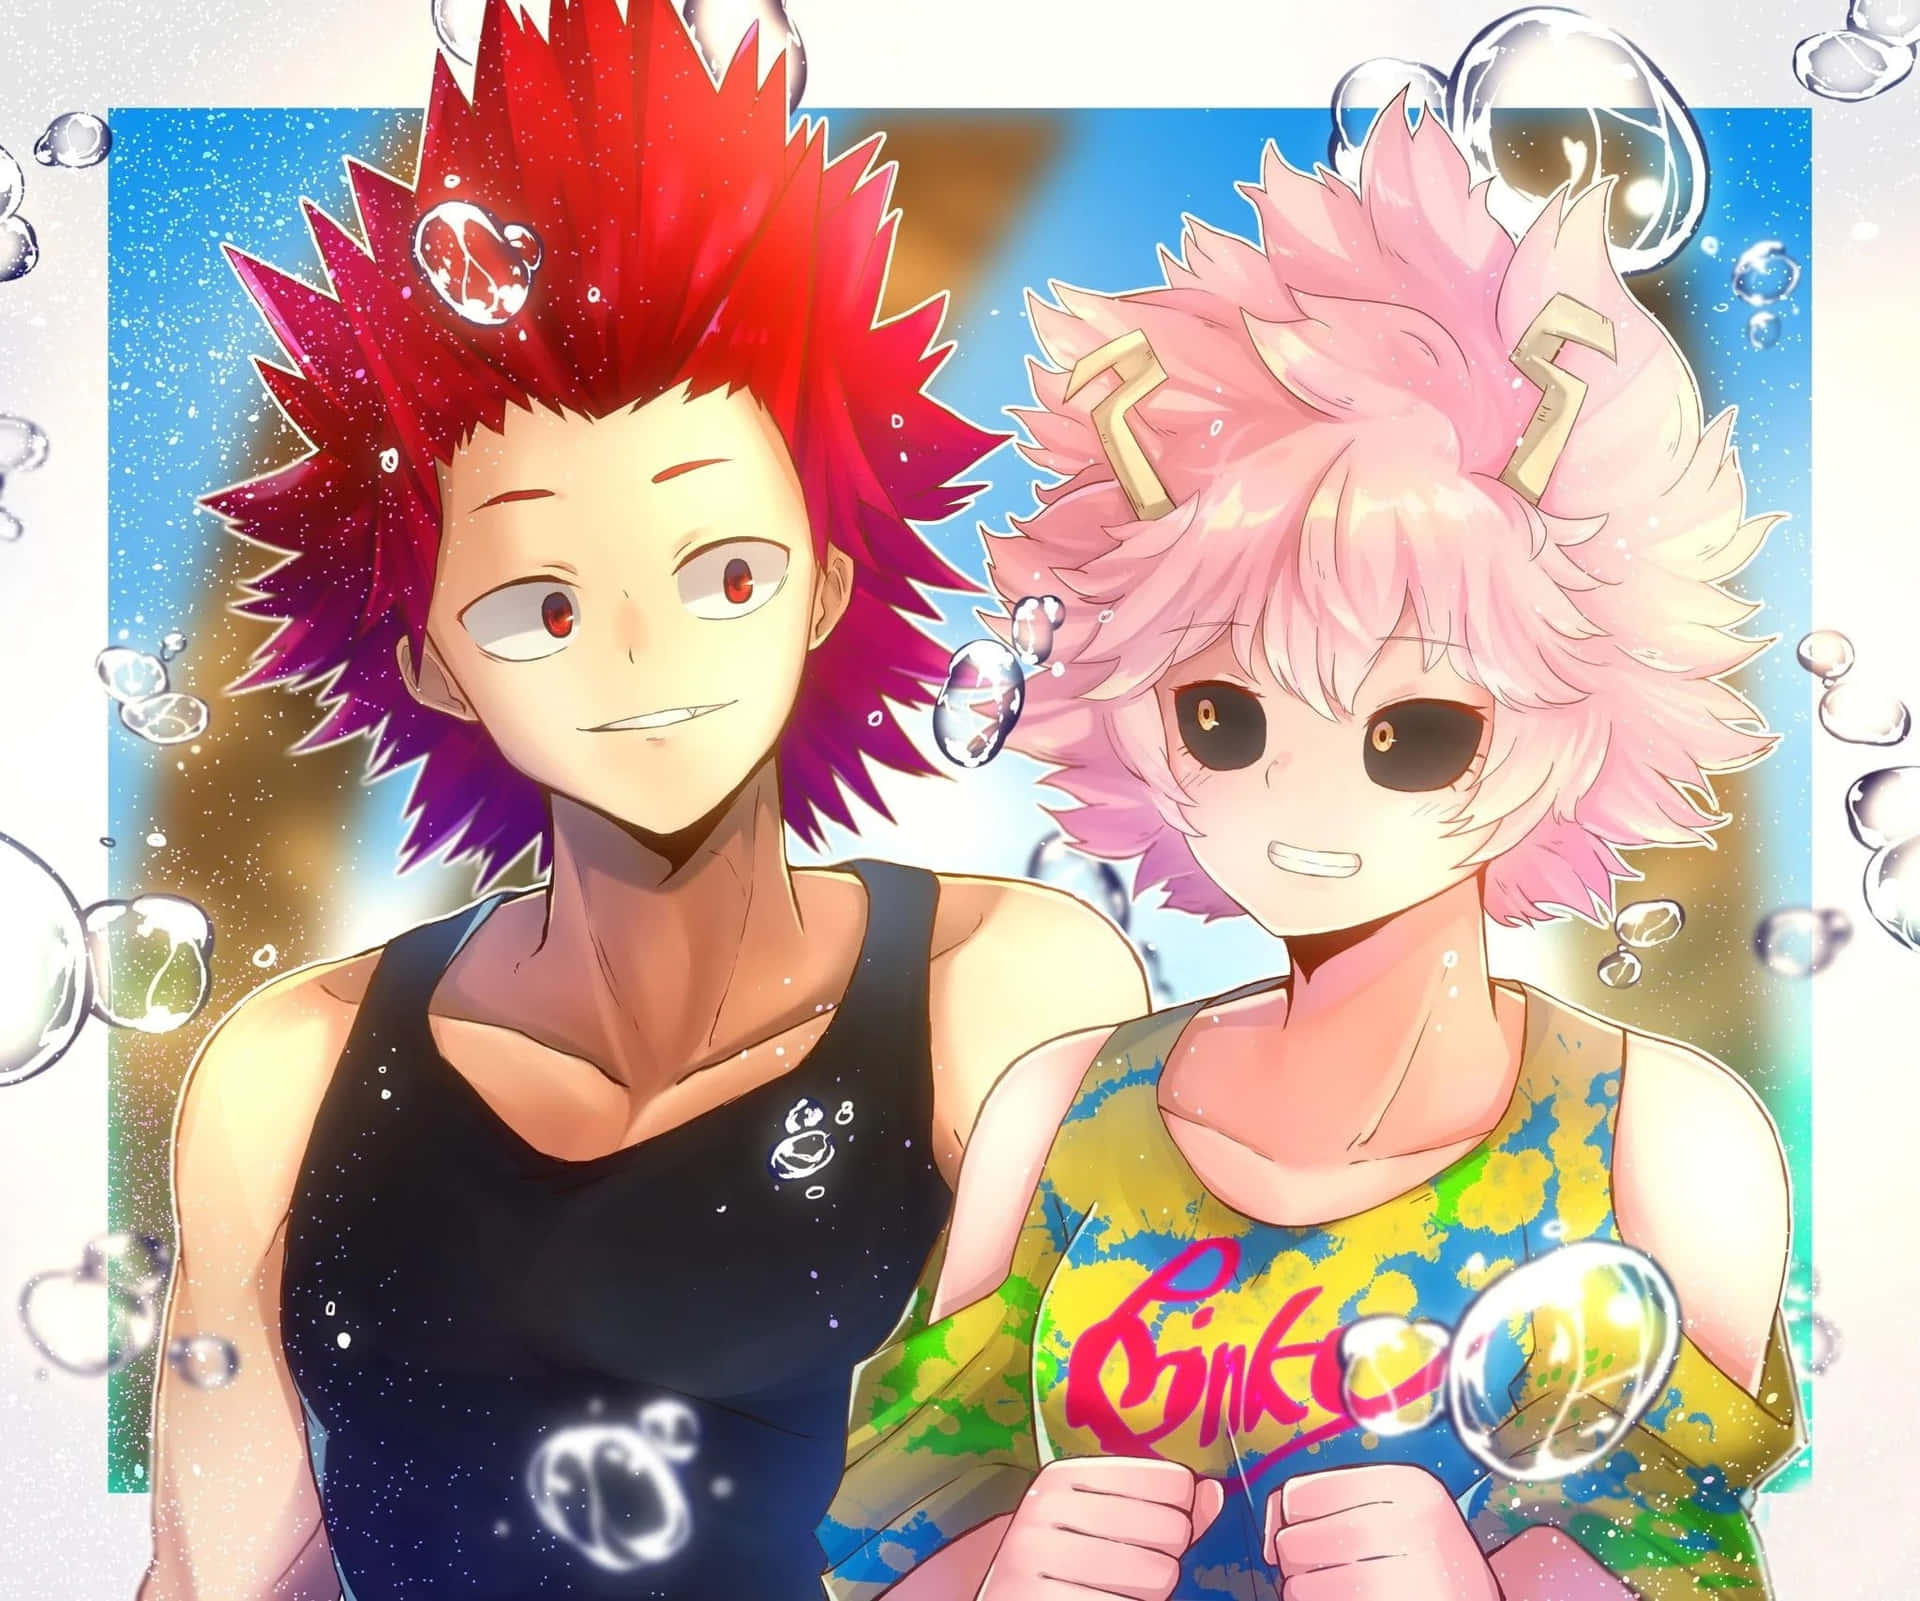 Animecharaktere Eijiro Kirishima Und Mina Ashido Im Sommer Wallpaper